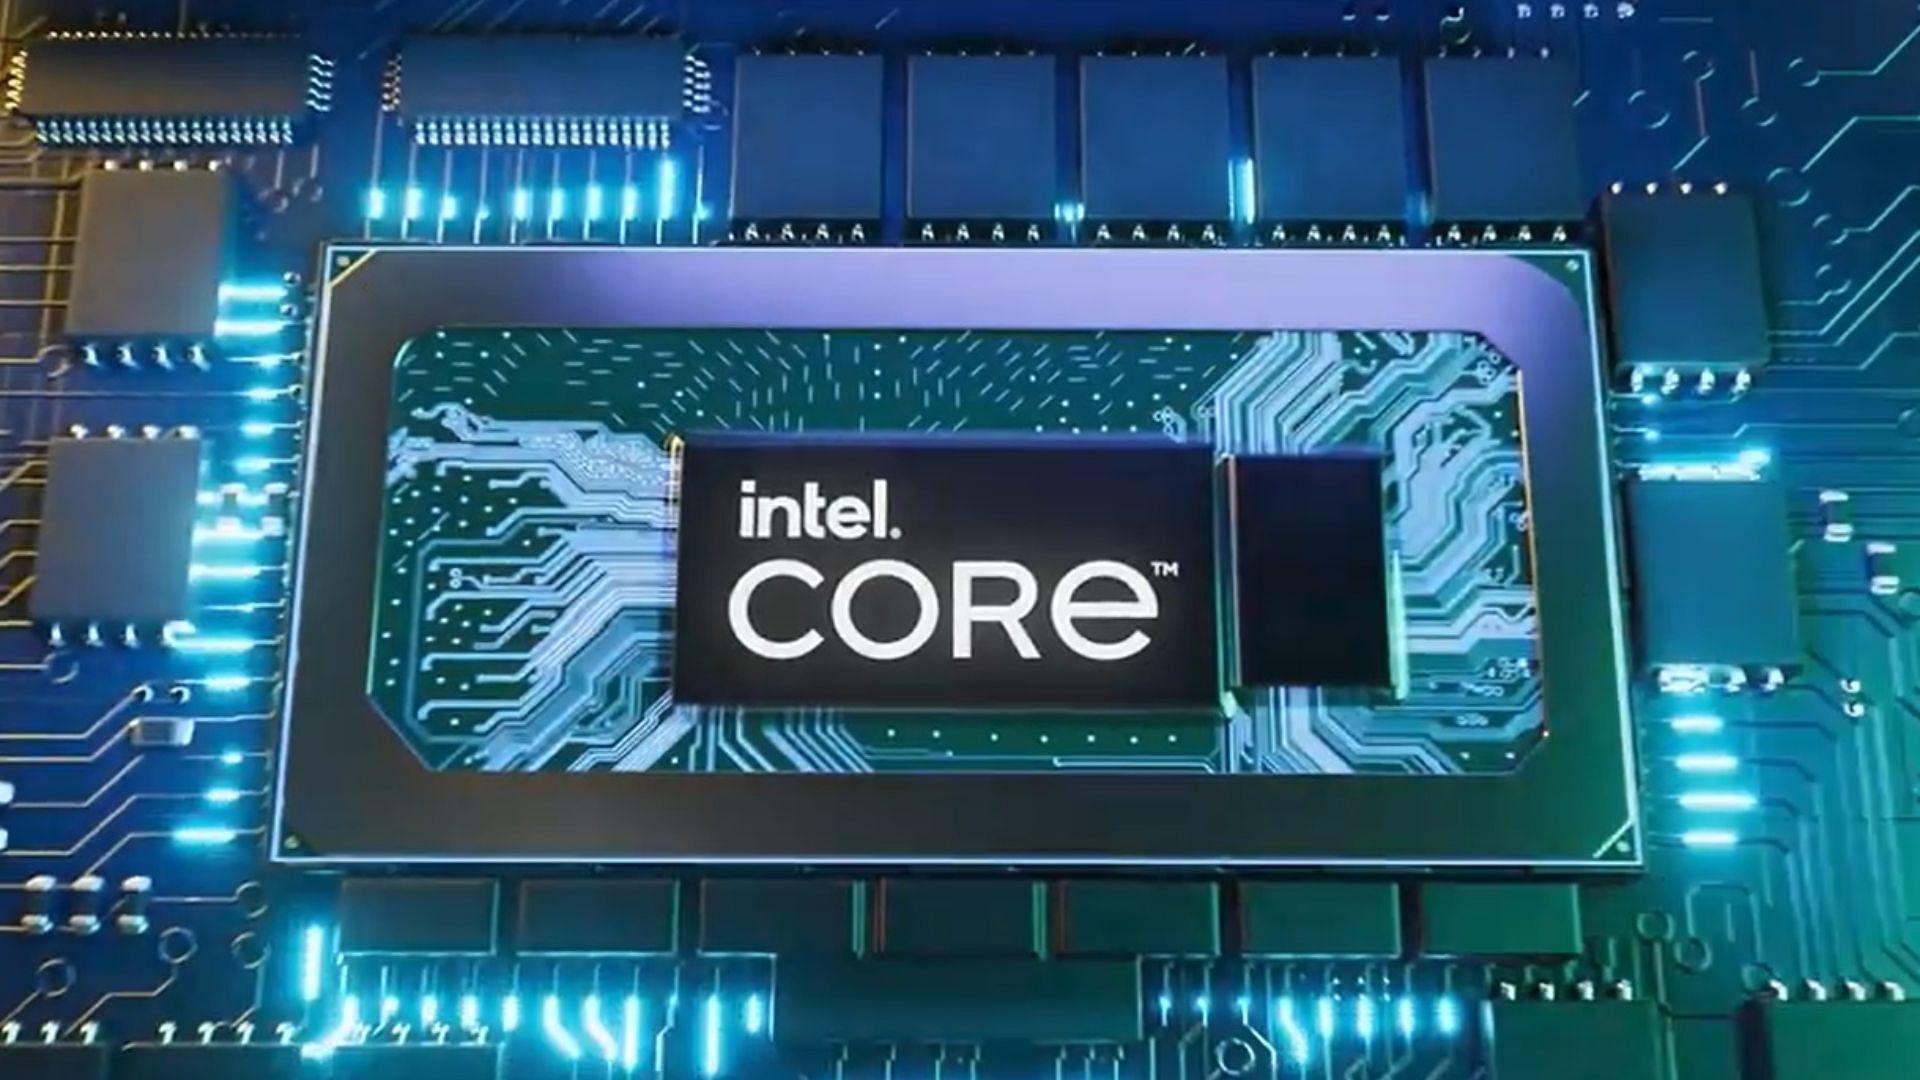 The new Intel Core logo (Image via Intel)